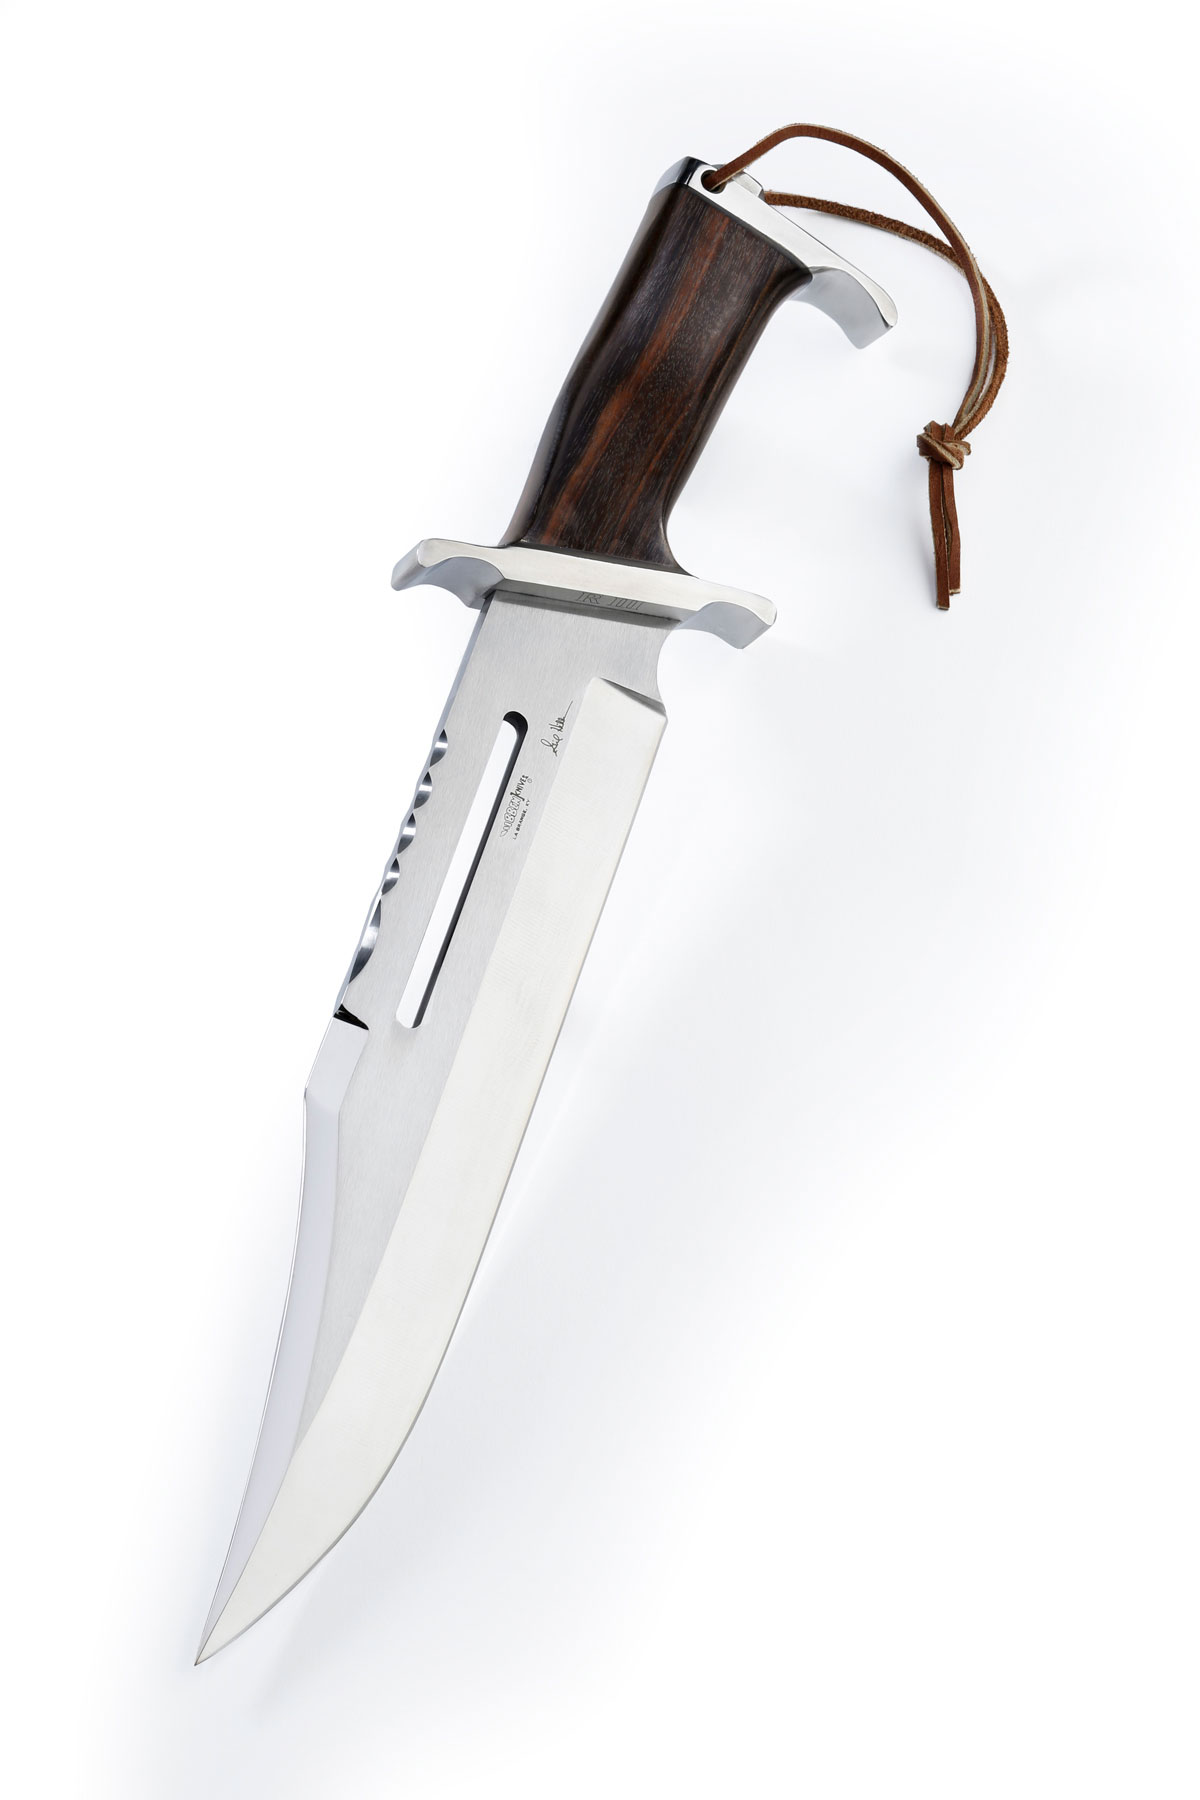 rambo hunting knife